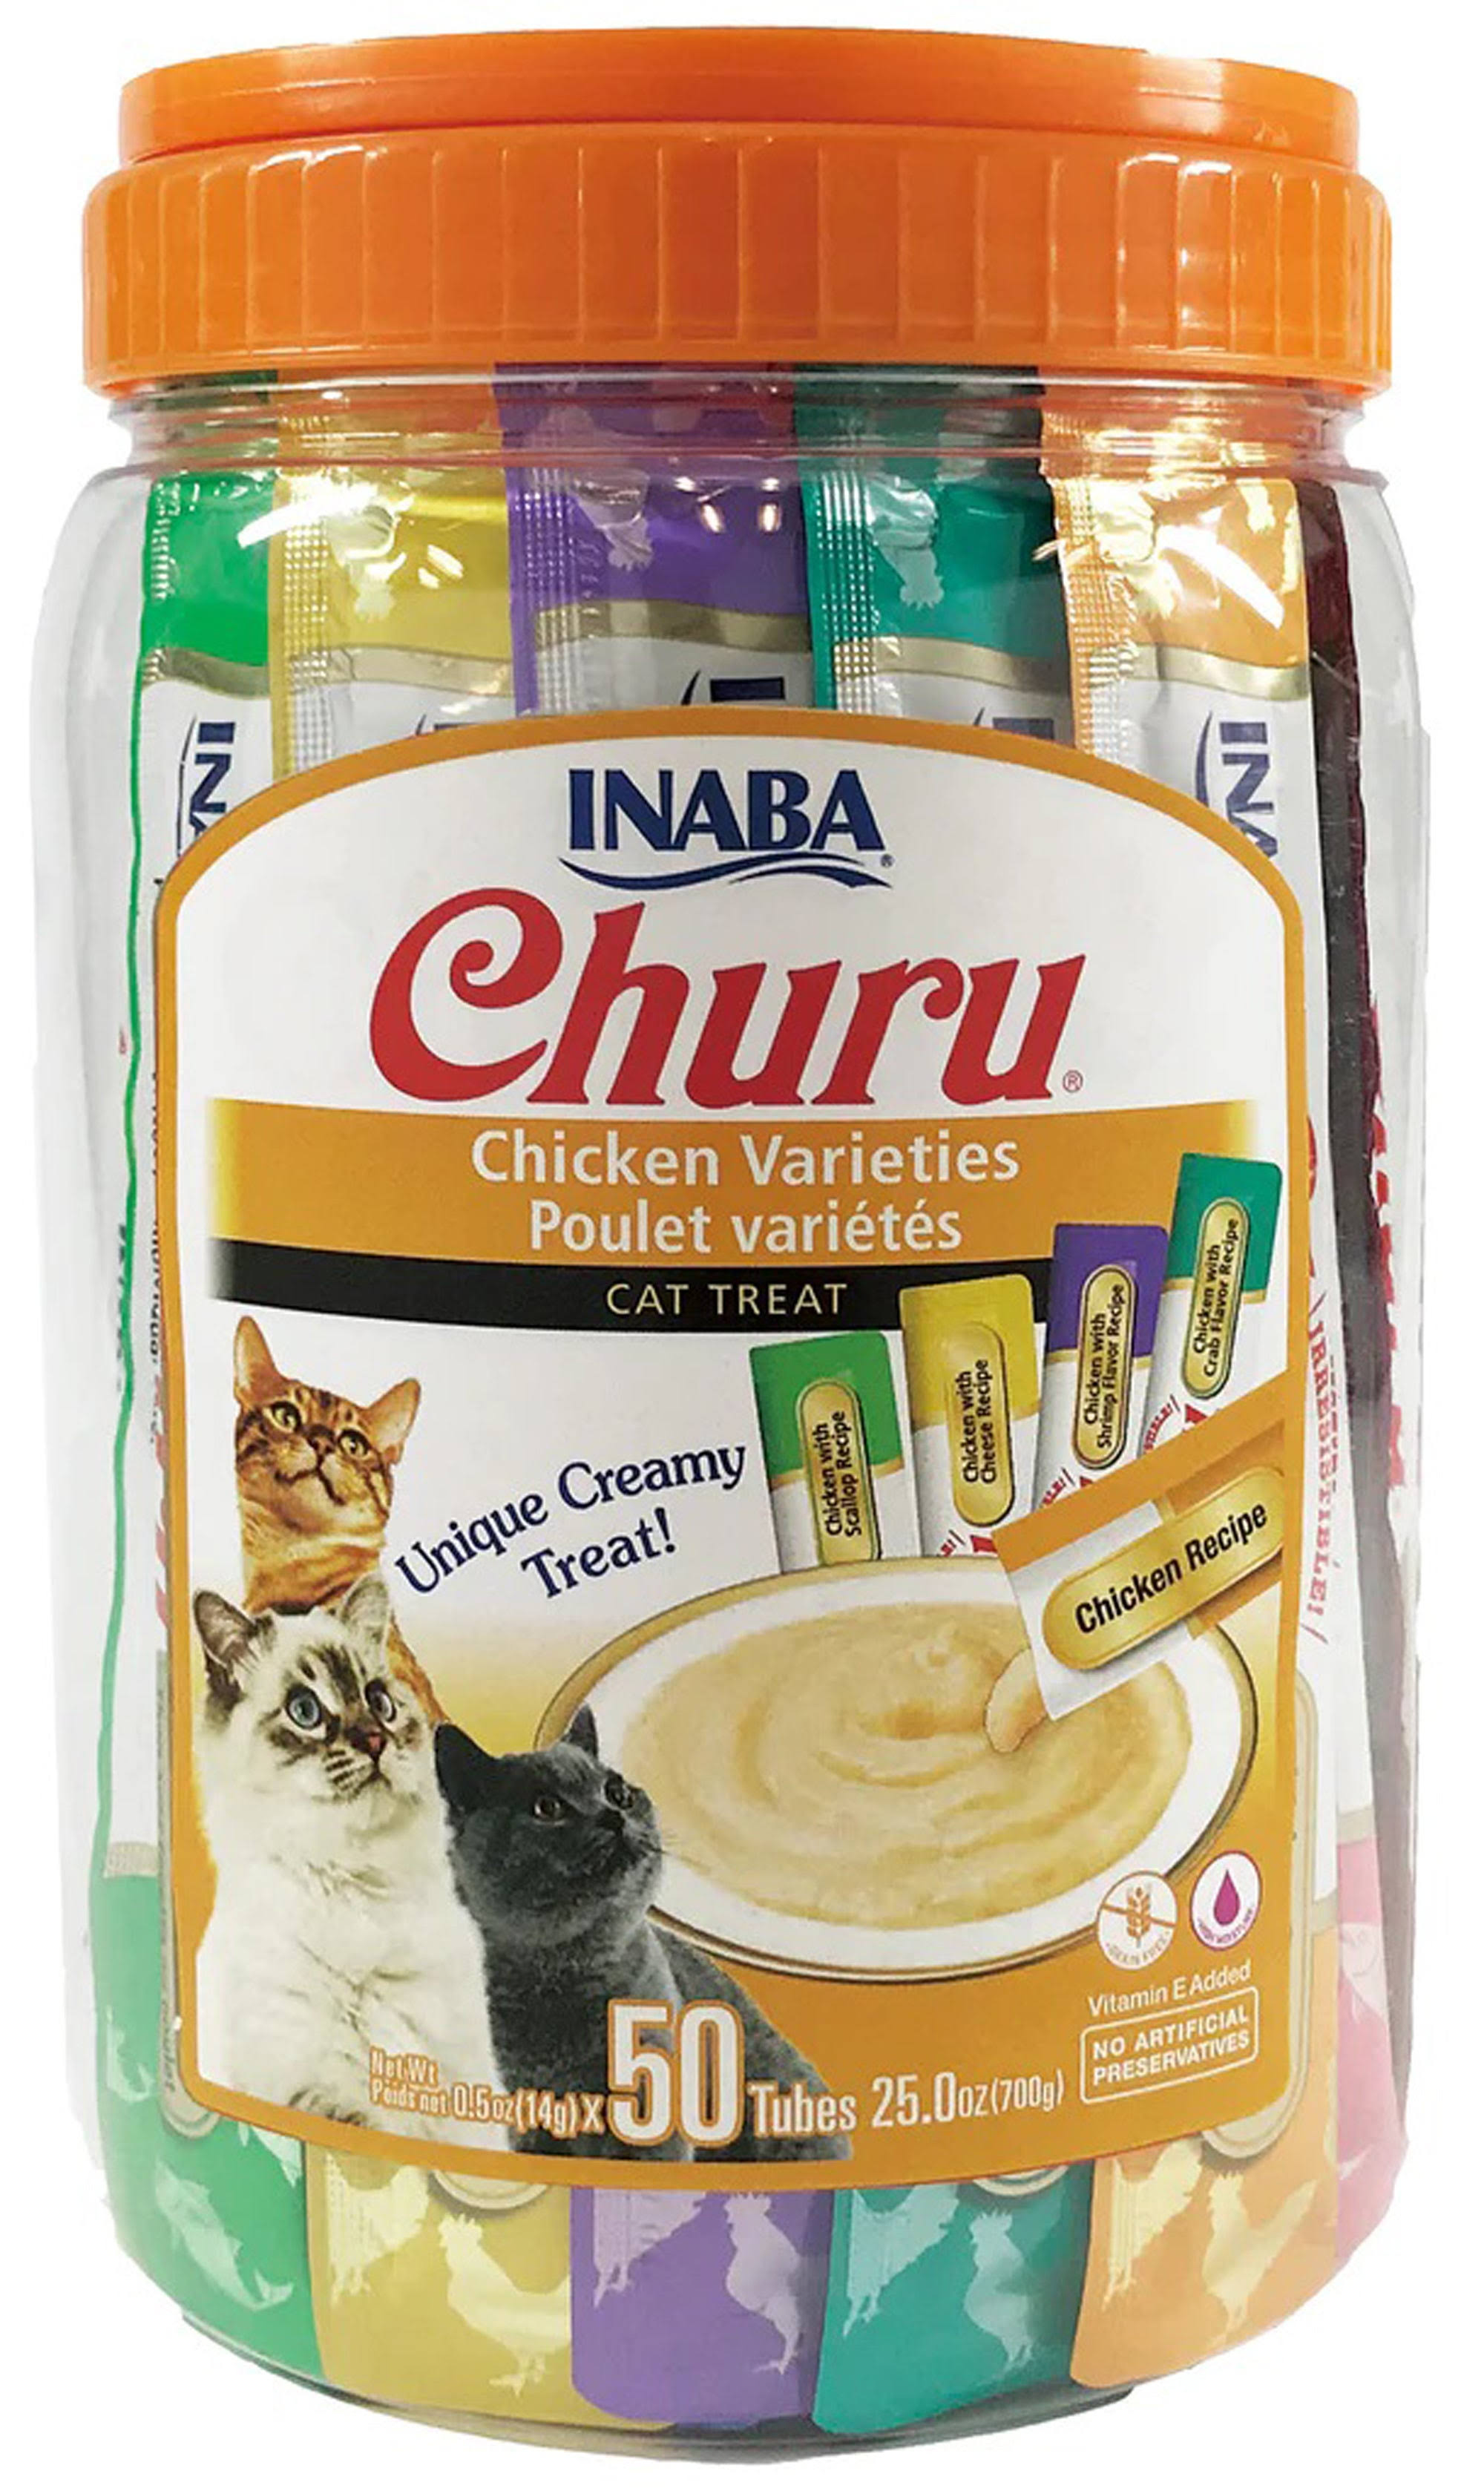 INABA Churu Cat Treats, Grain-Free, Lickable, Squeezable Creamy Pure Cat Treat with Taurine & Vitamin E, 0.5 Ounces Each Tube, 50 Tubes Total